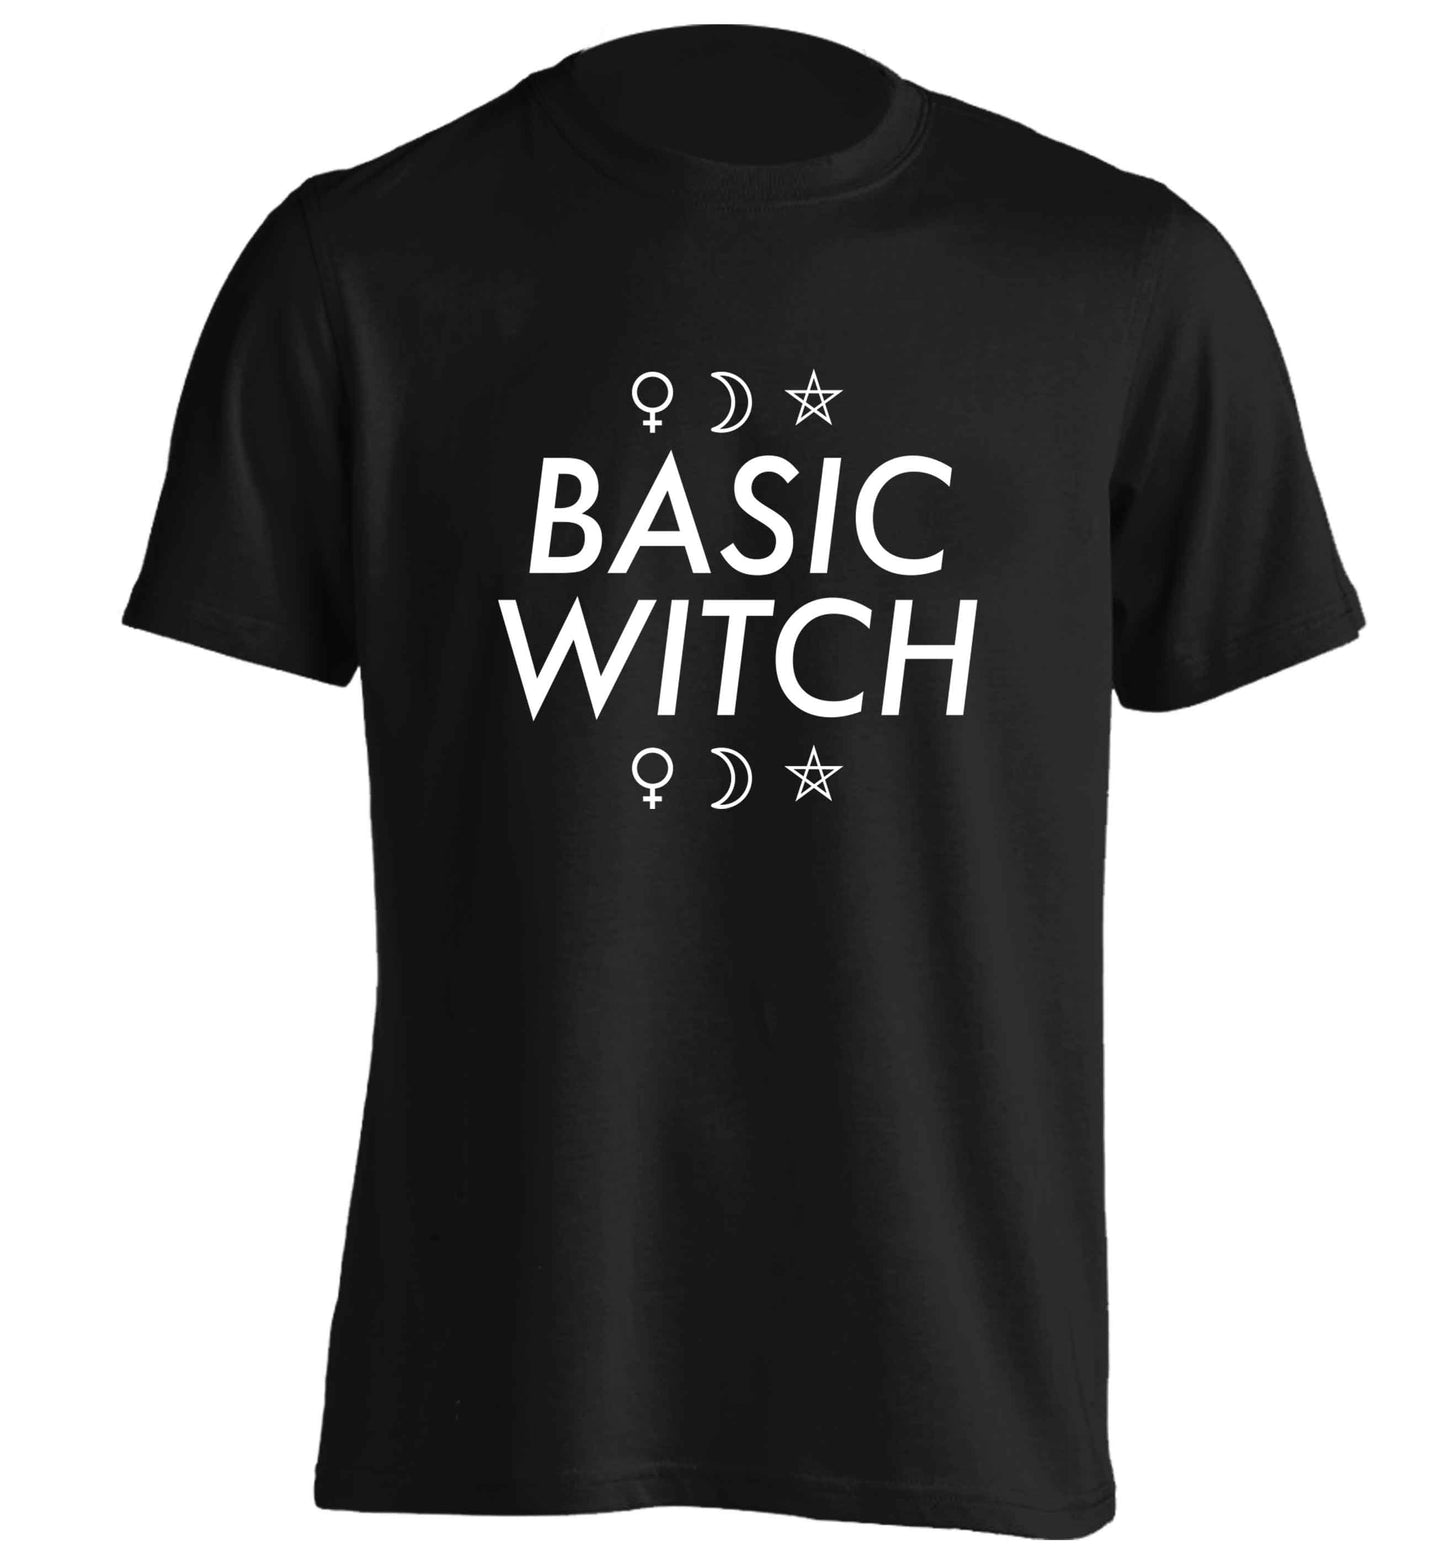 Basic witch 1 adults unisex black Tshirt 2XL